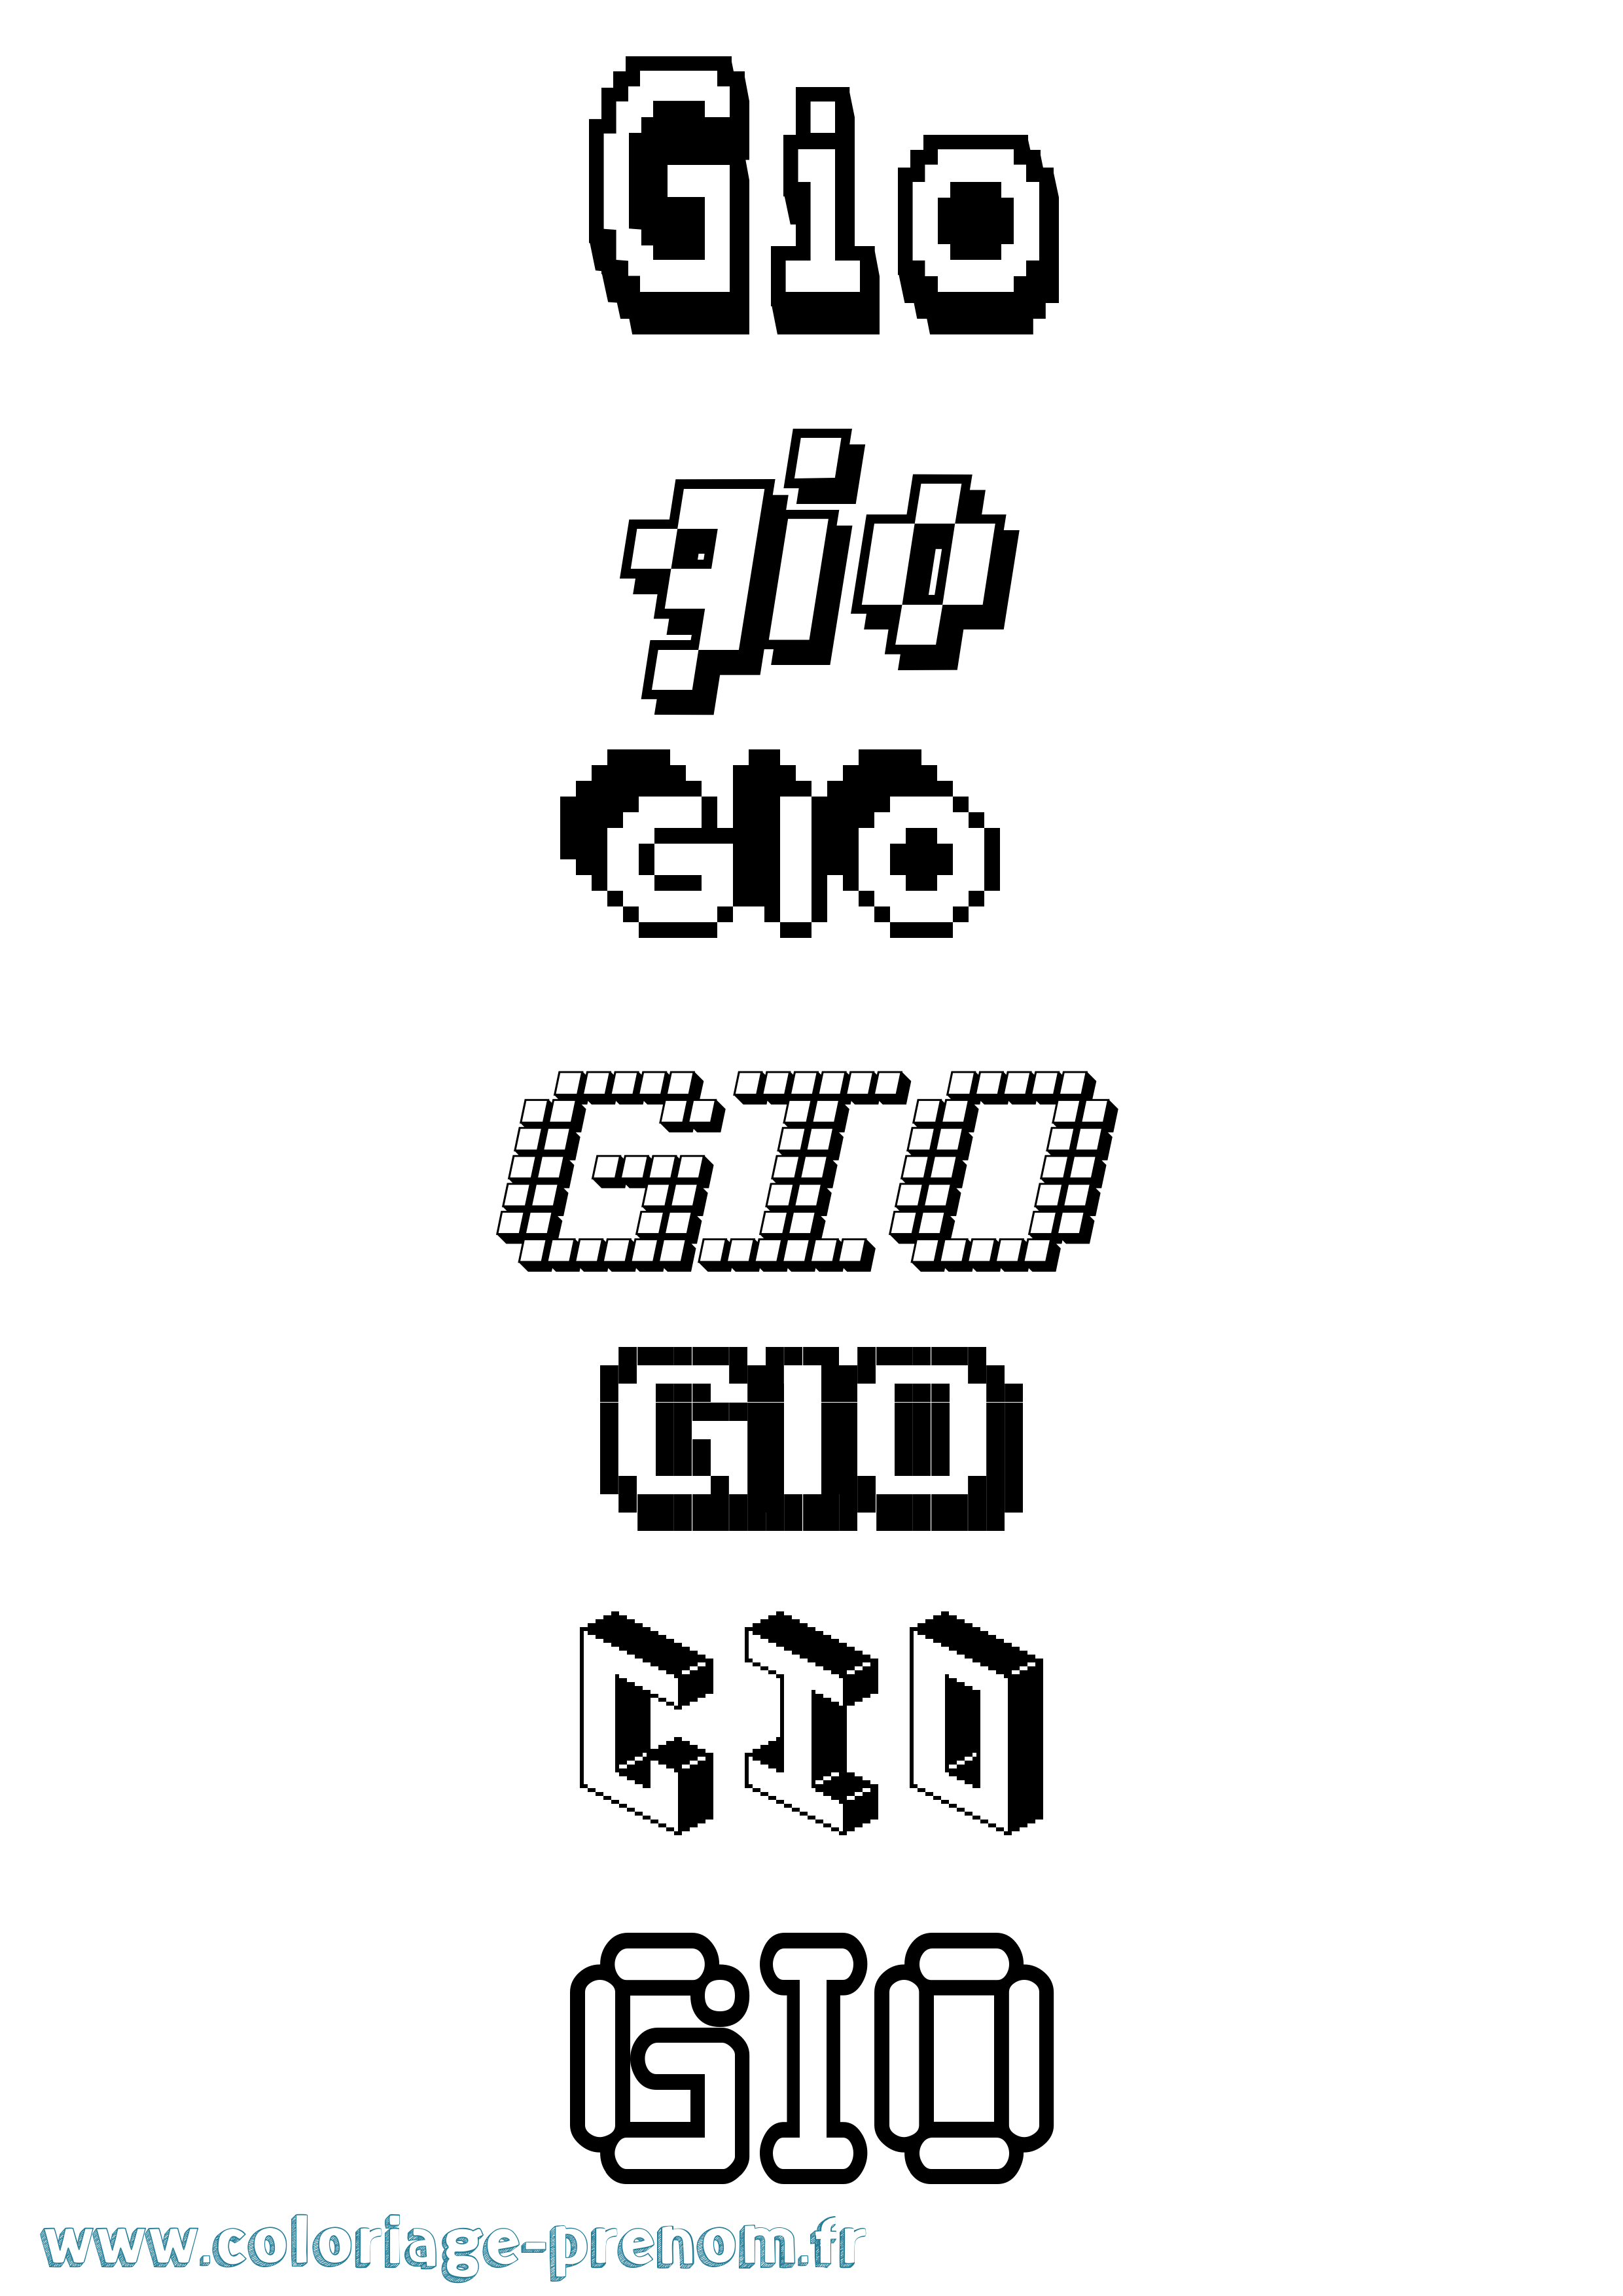 Coloriage prénom Gio Pixel